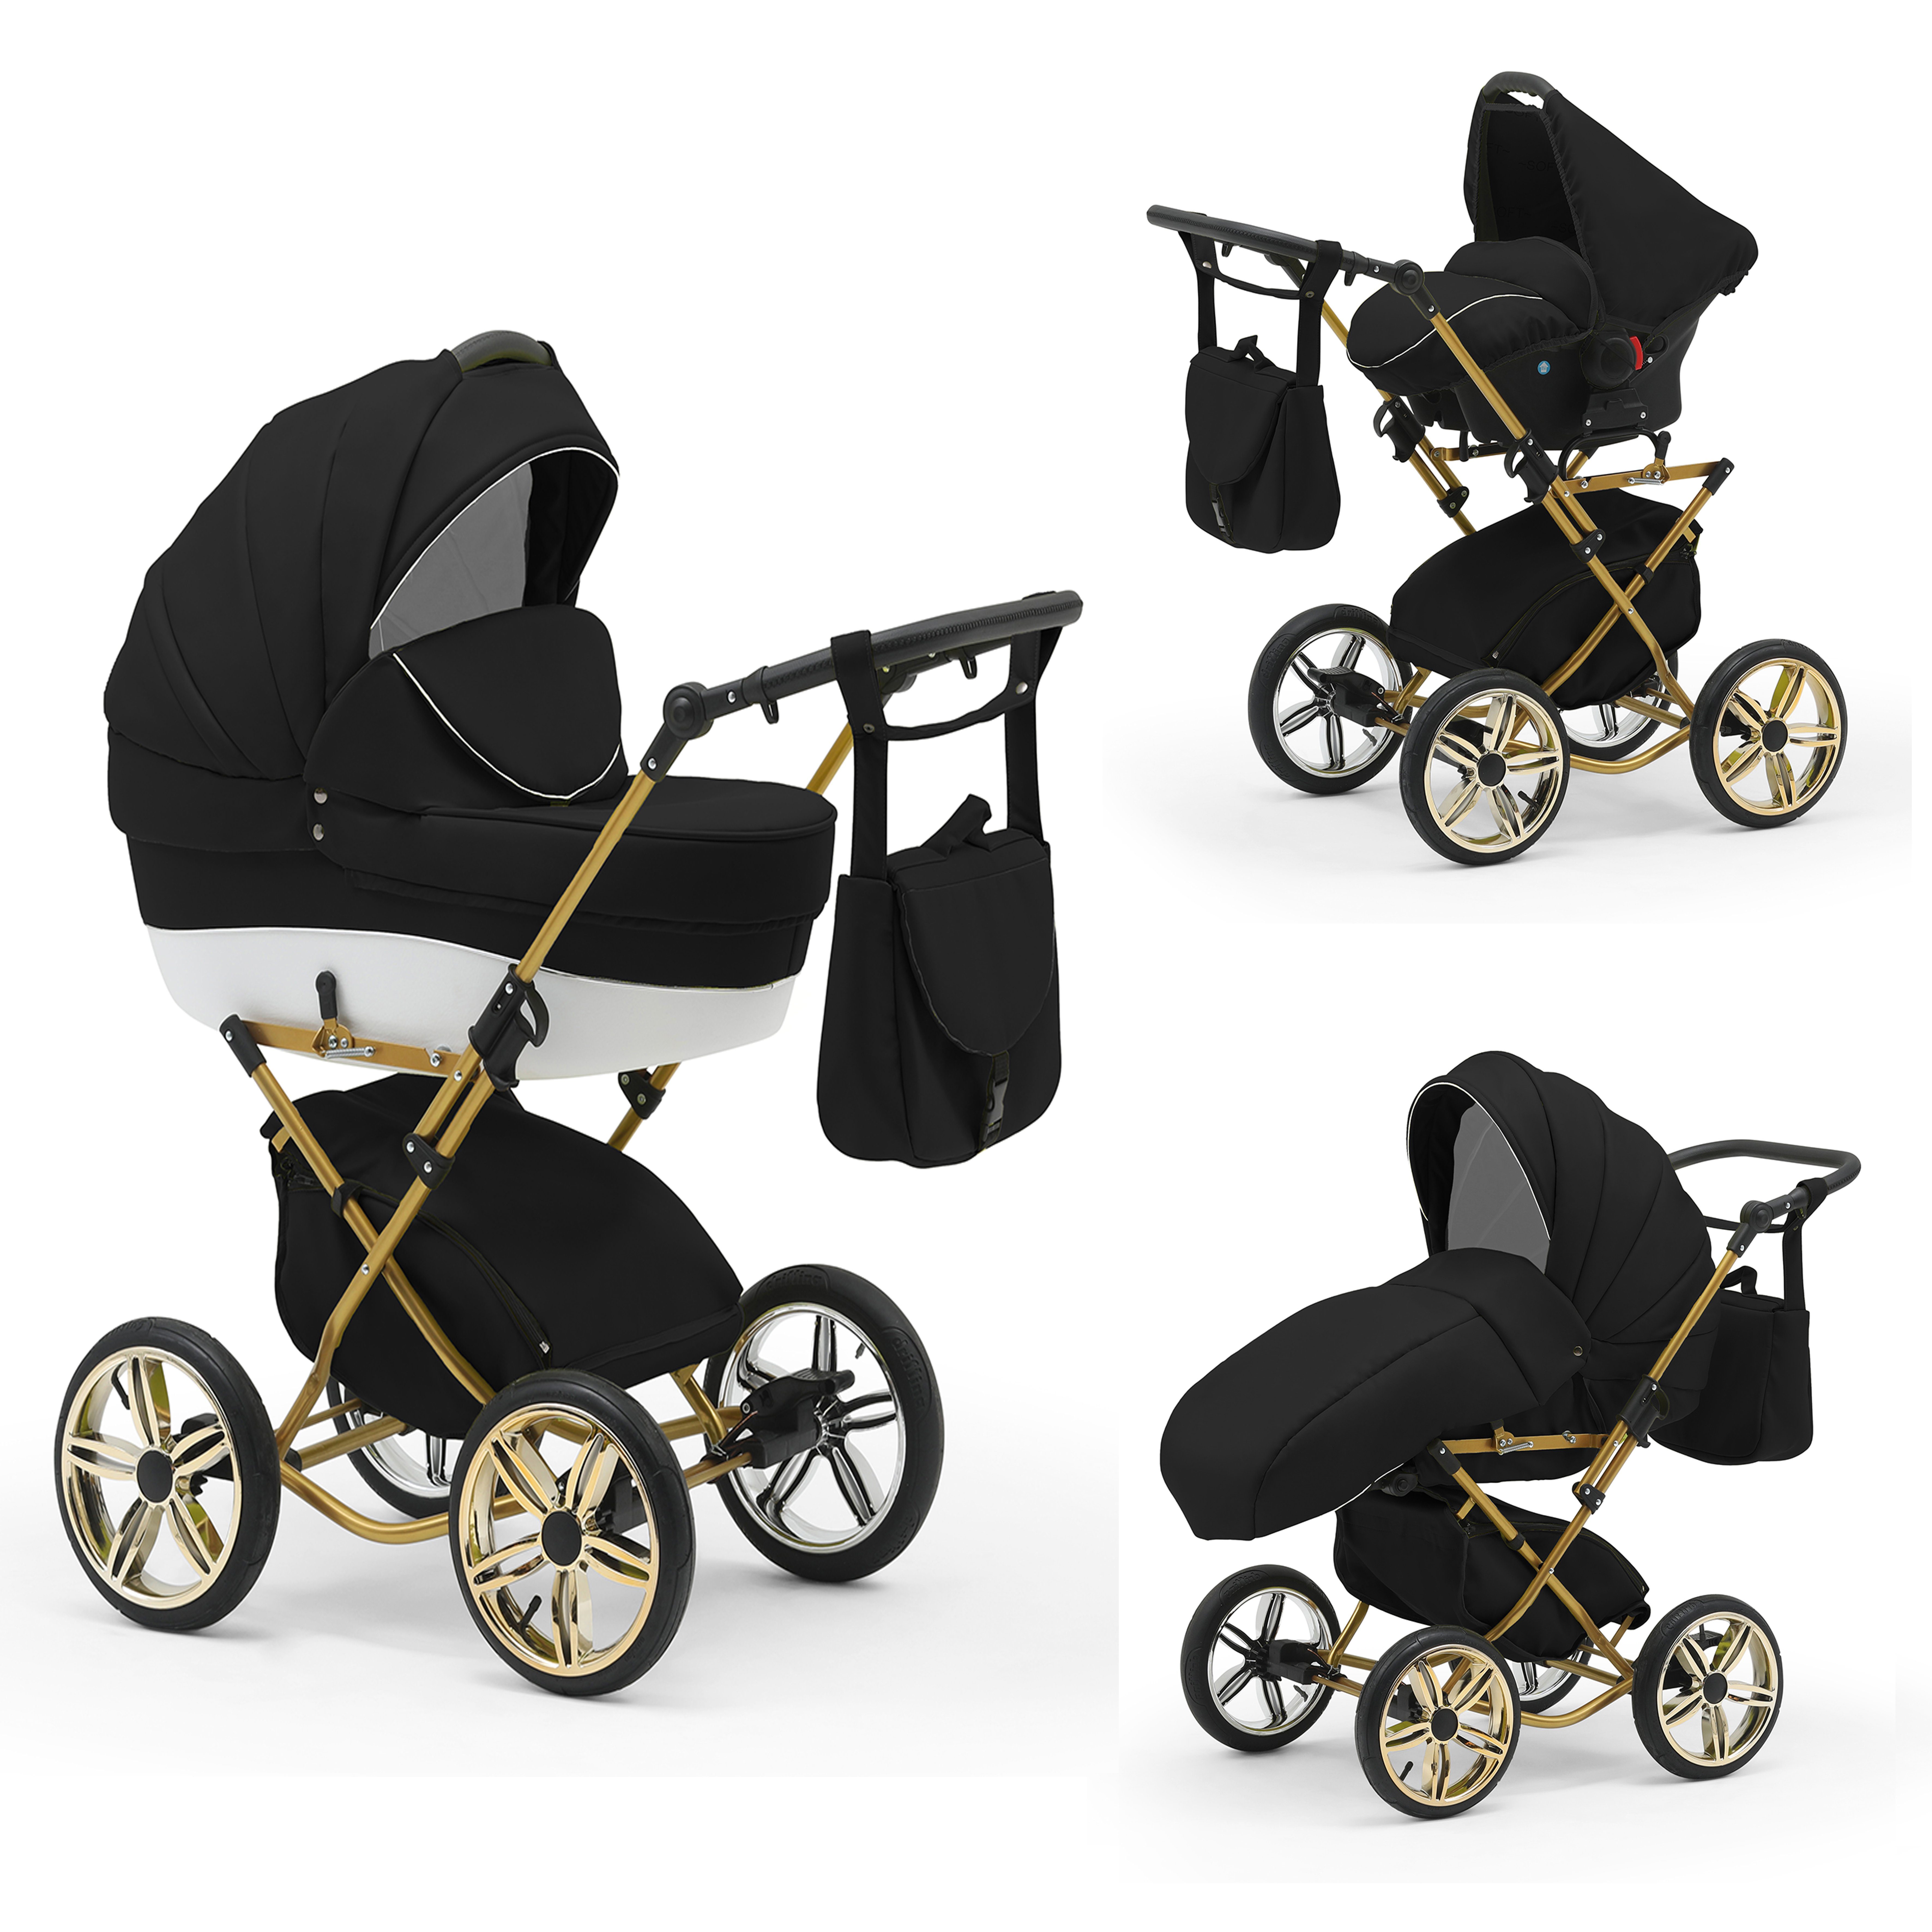 babies-on-wheels Kombi-Kinderwagen Sorento 3 in 1 inkl. Autositz - 13 Teile - in 10 Designs Schwarz-Weiß